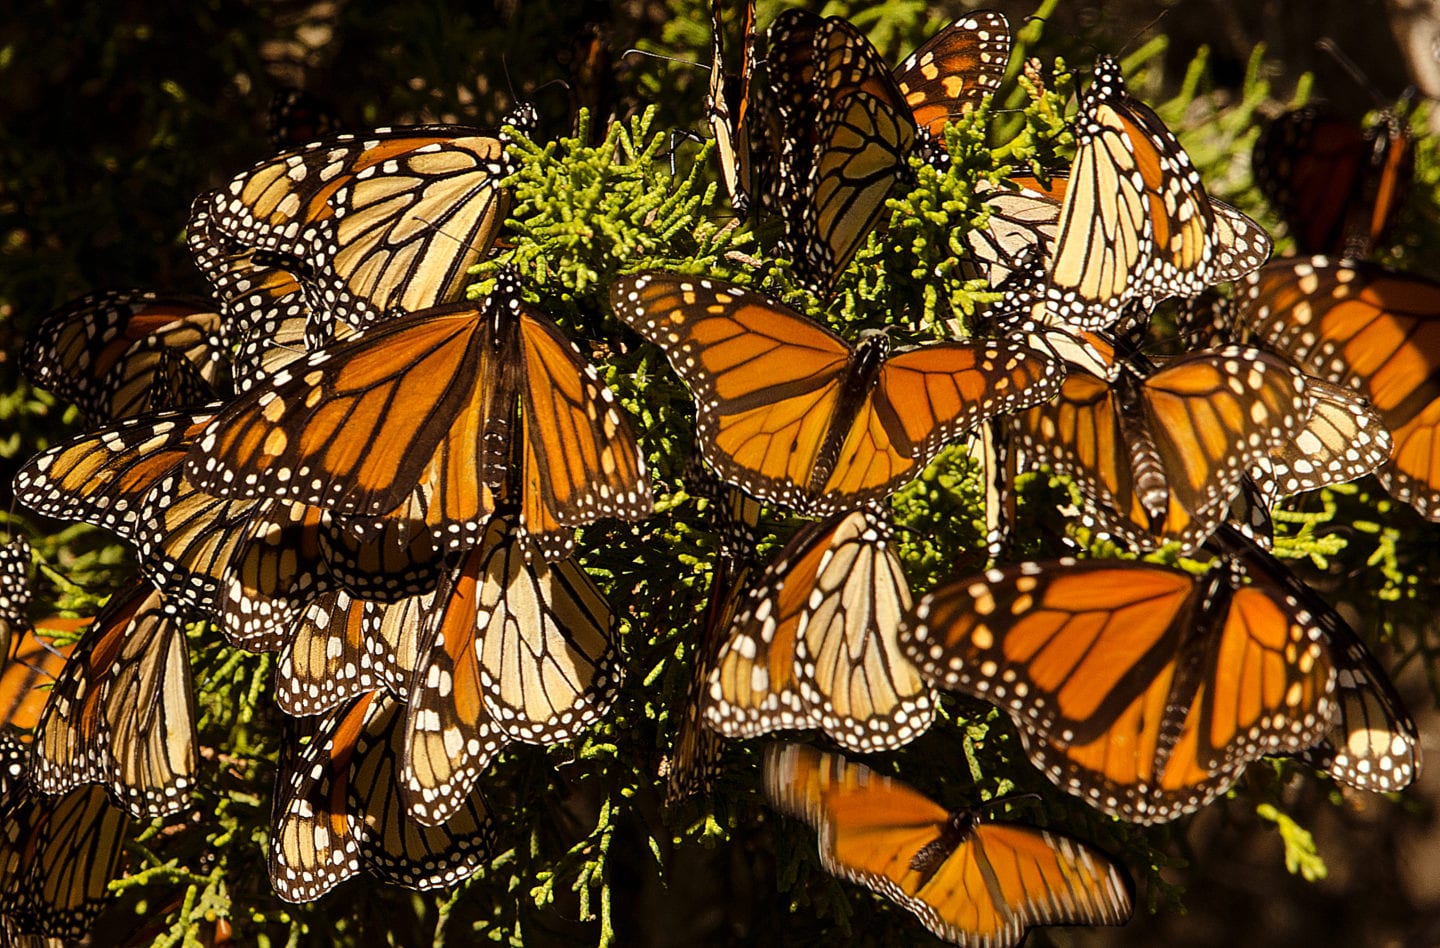 Ventura County residents to get milkweed for monarchs